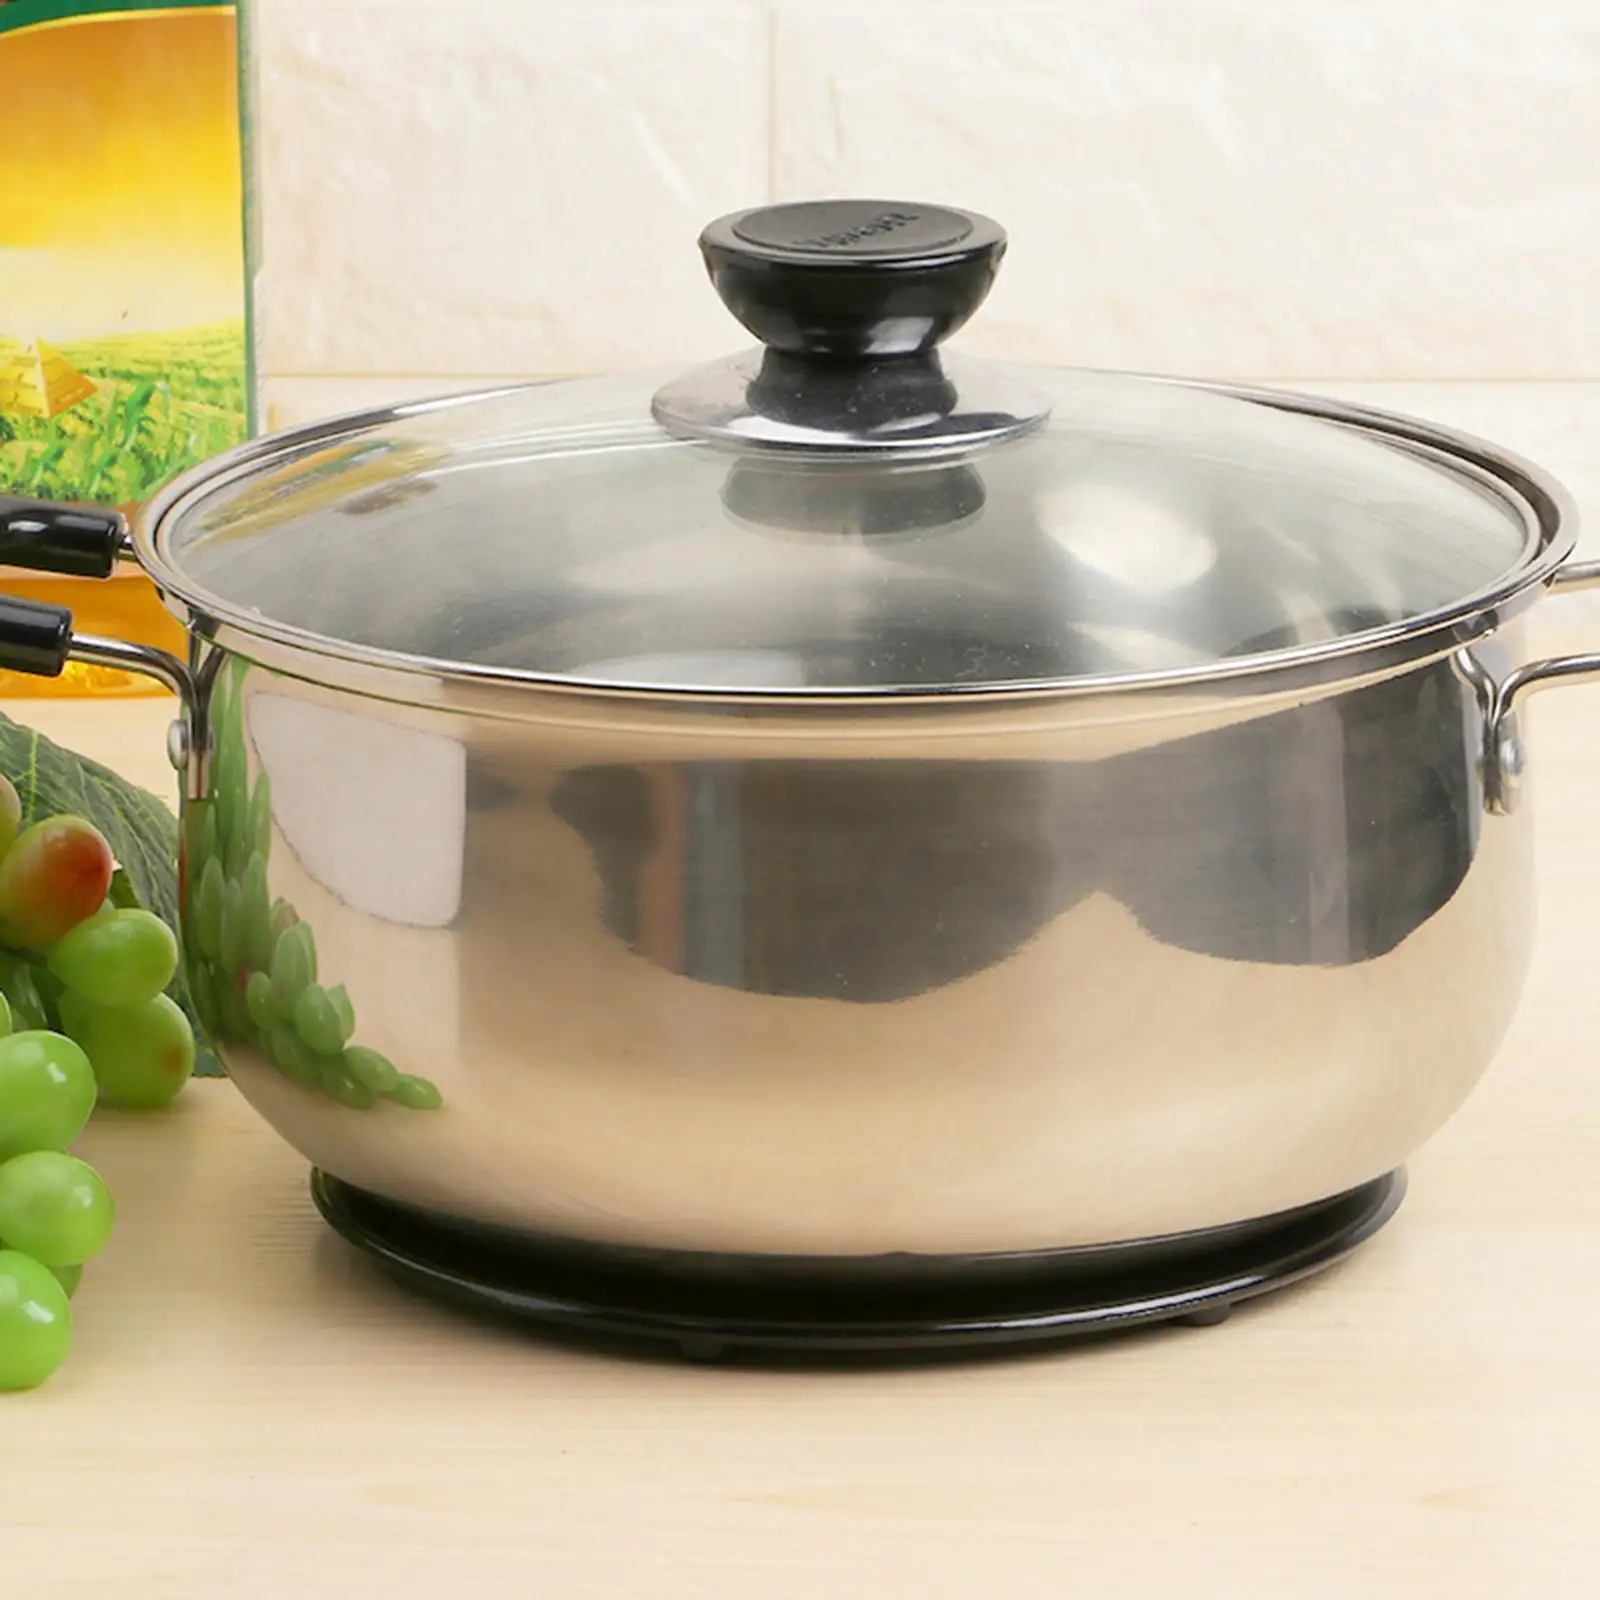 Hot Pot Mat Multipurpose Non Slip Kitchen Counter Round Dish Mat Kitchen Pot Holder for Pans Dishes Bowls Plates Hot Pot